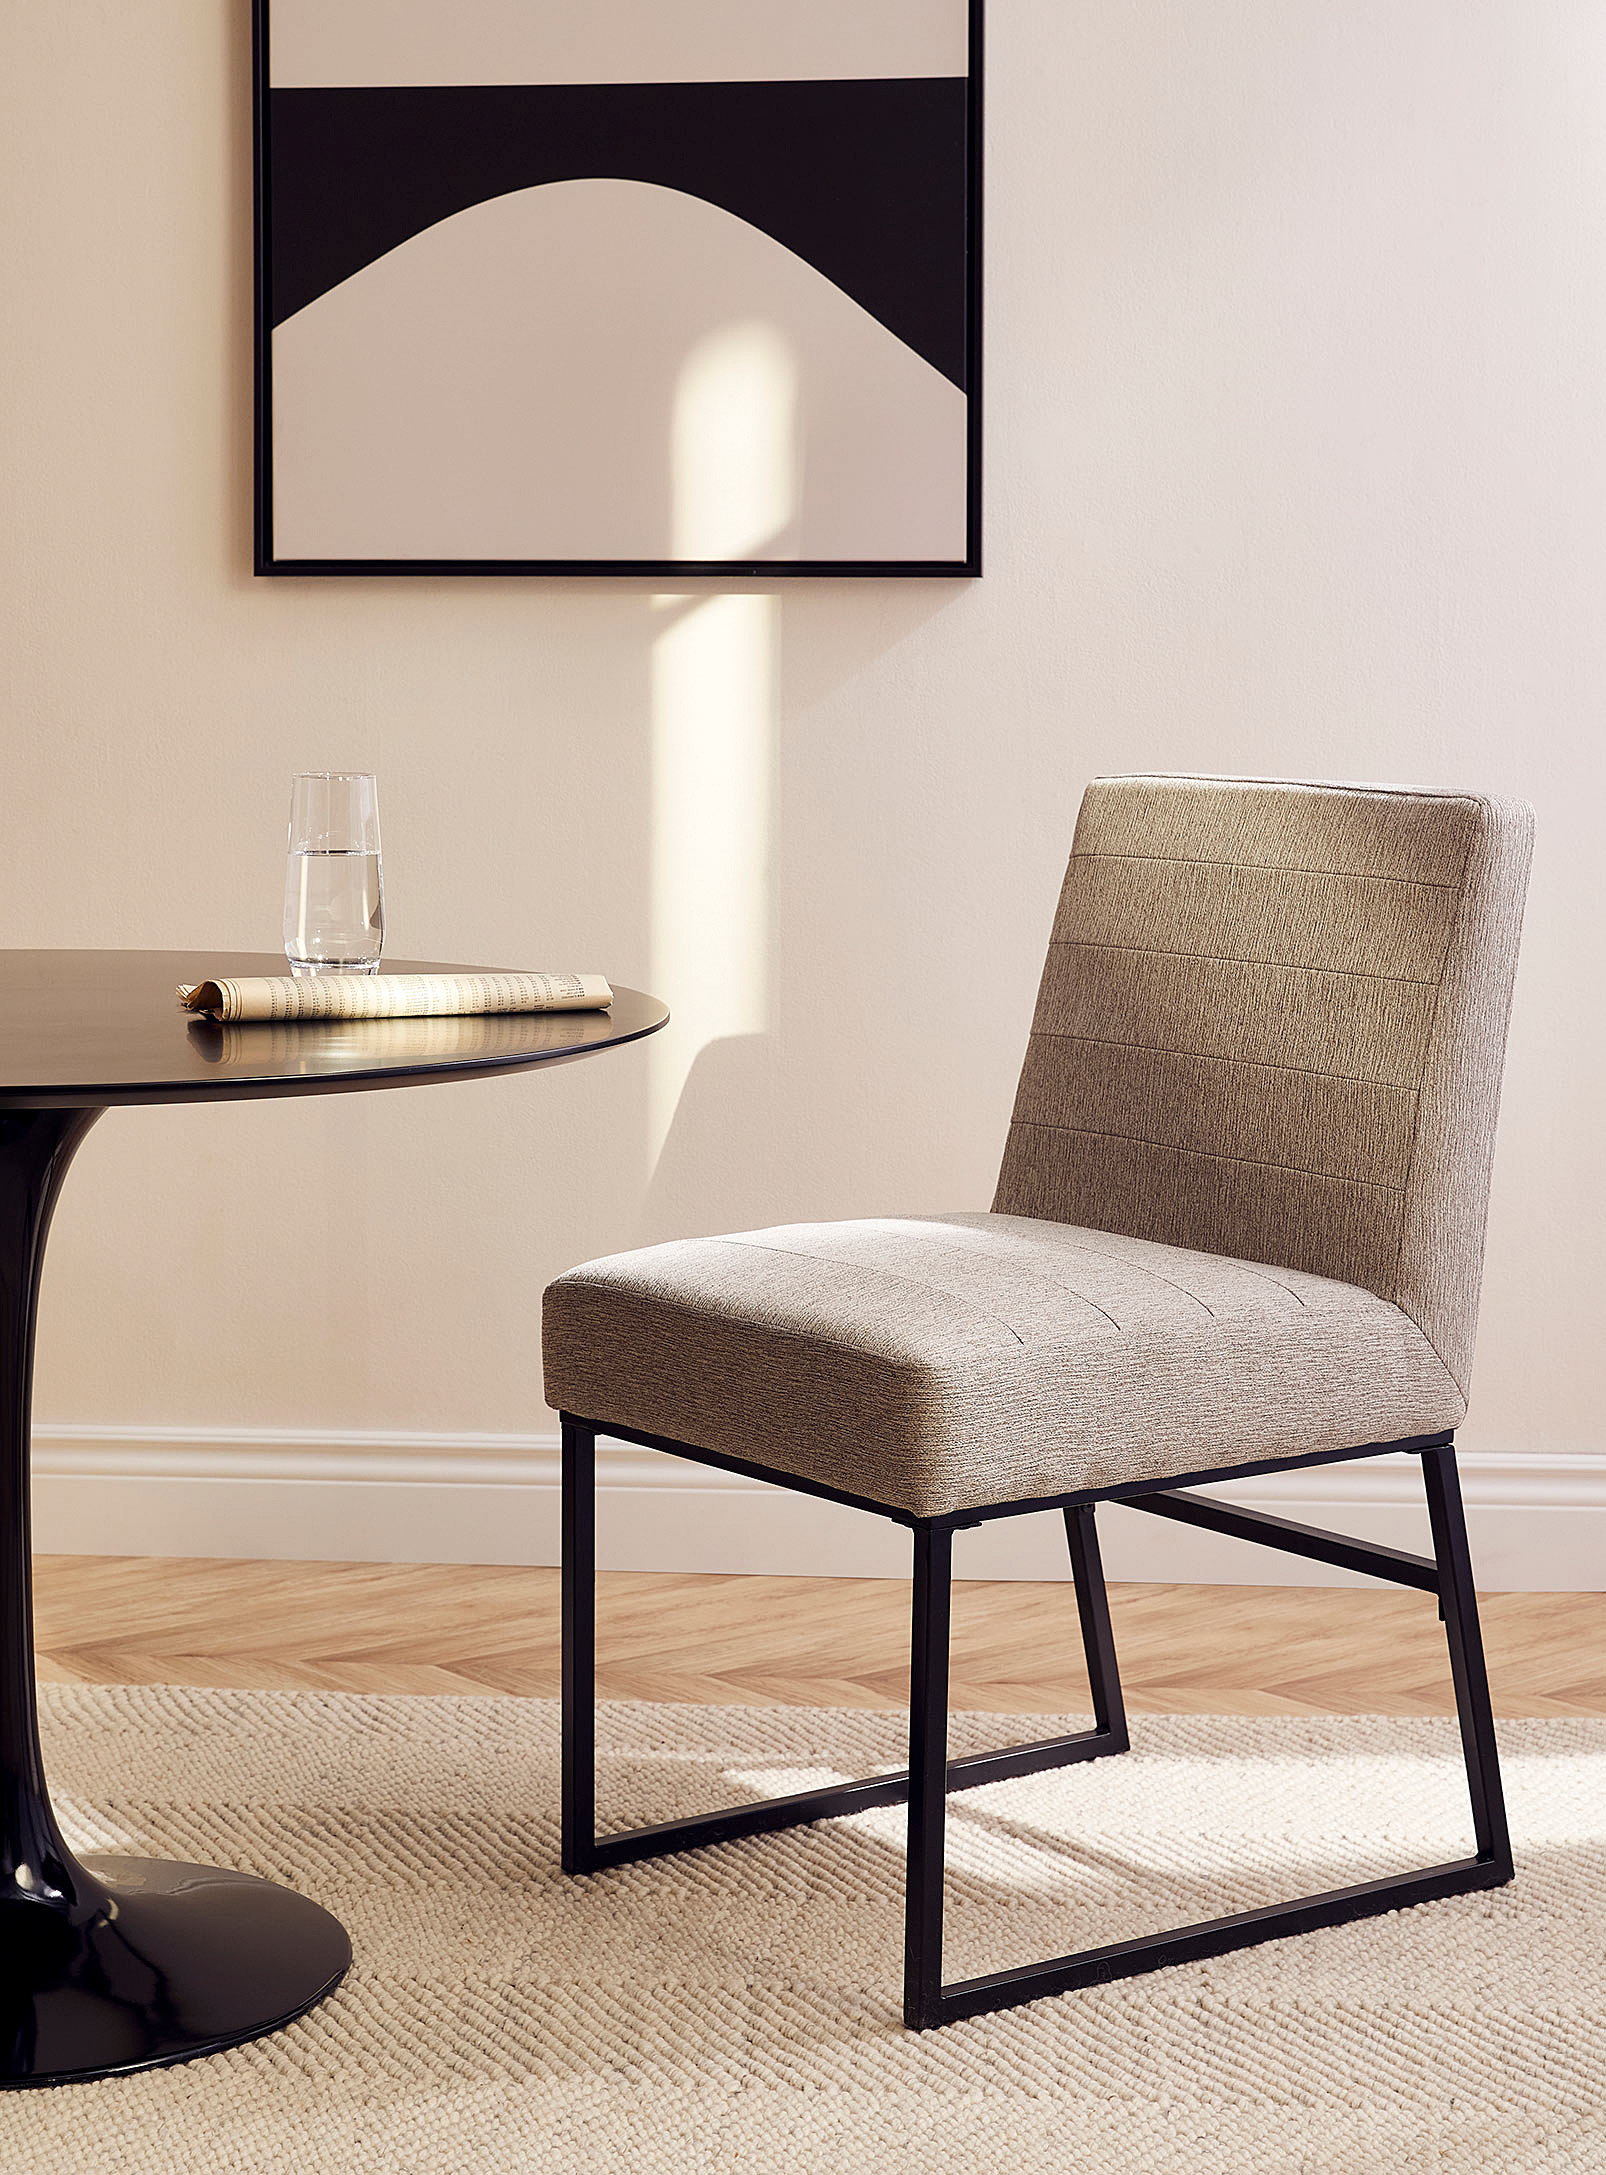 Simons Maison - Structured silhouette sleek chair